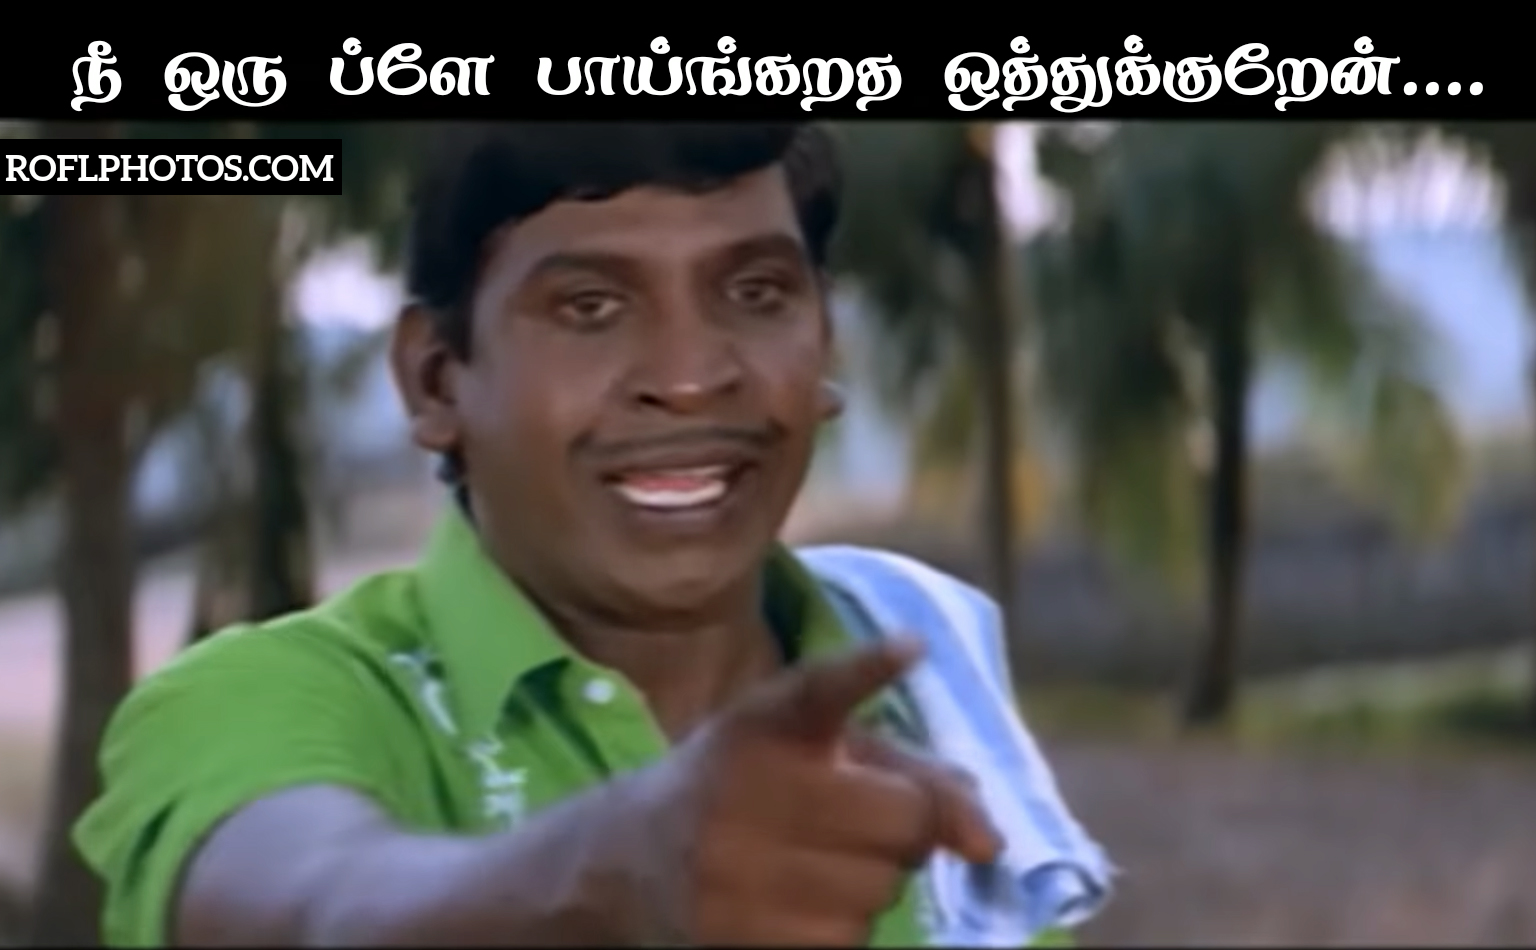 Tamil Comedy Memes: Dp comments Memes Images | Dp comments Comedy Memes  Download | Tamil Funny Images With Dialogues | Tamil Photo Comments  Download | Tamil Comedy Images With Commants | Tamil